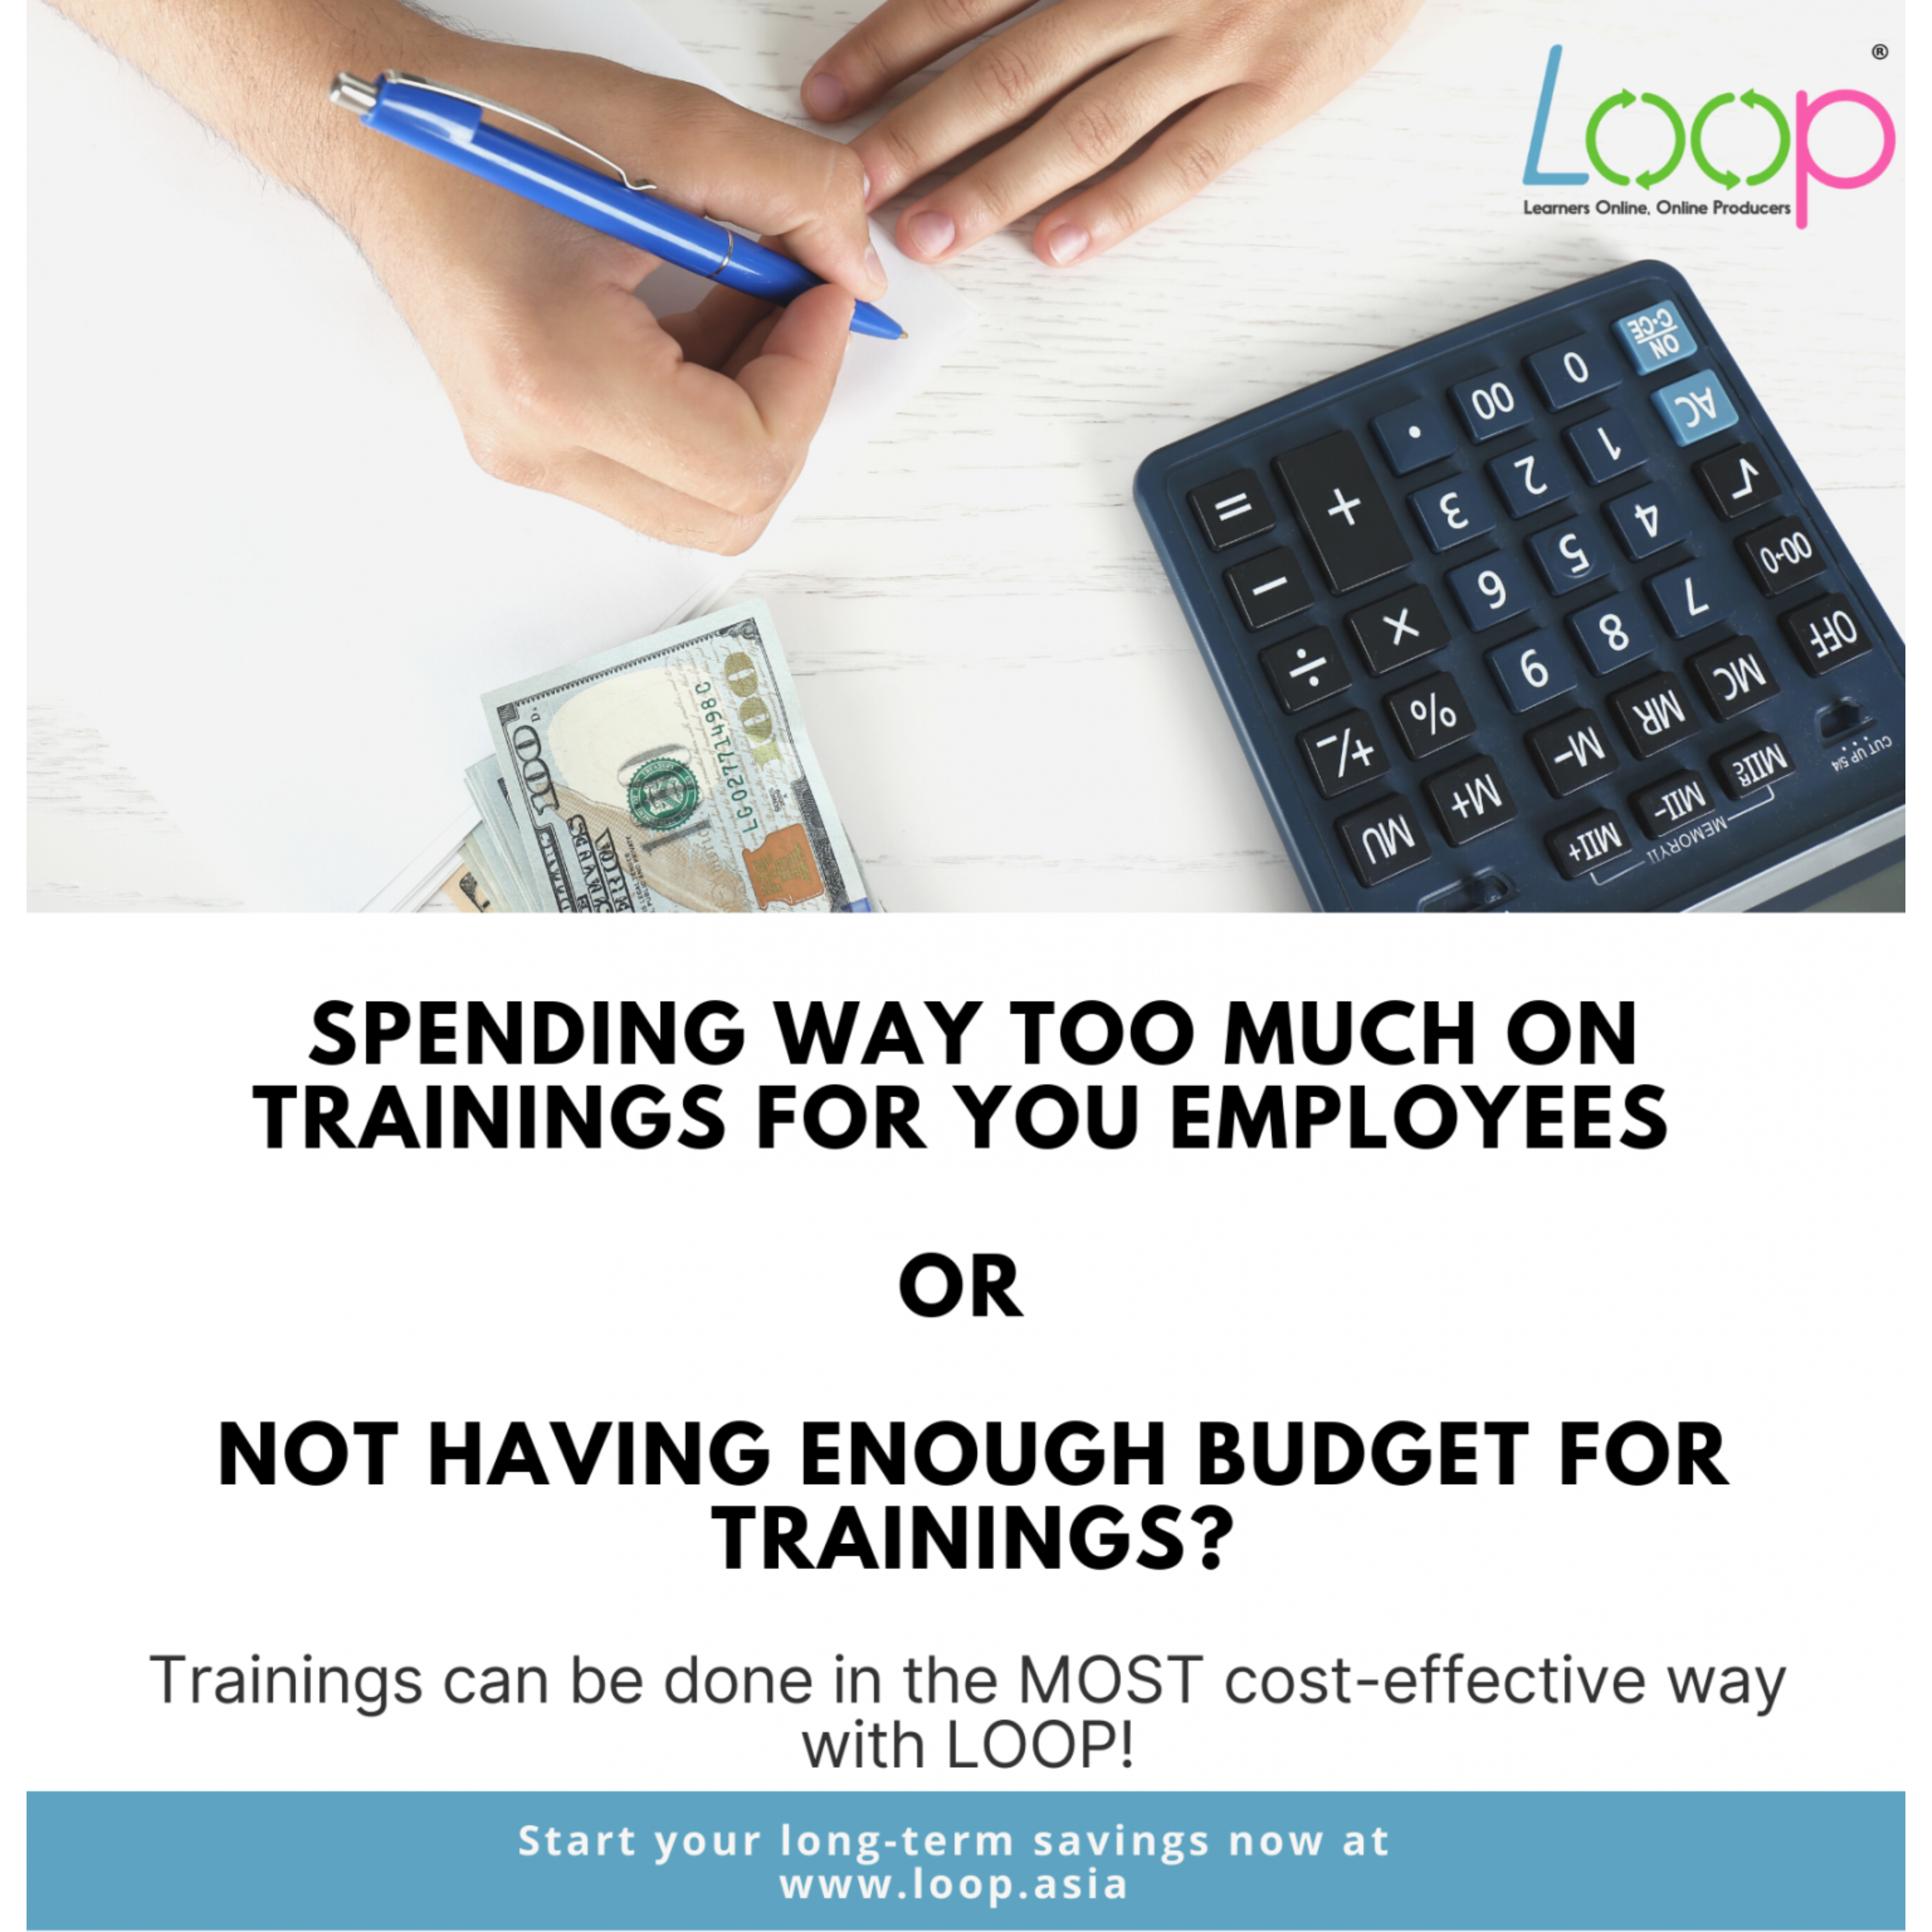 Start Having Cost-Effective Trainings!